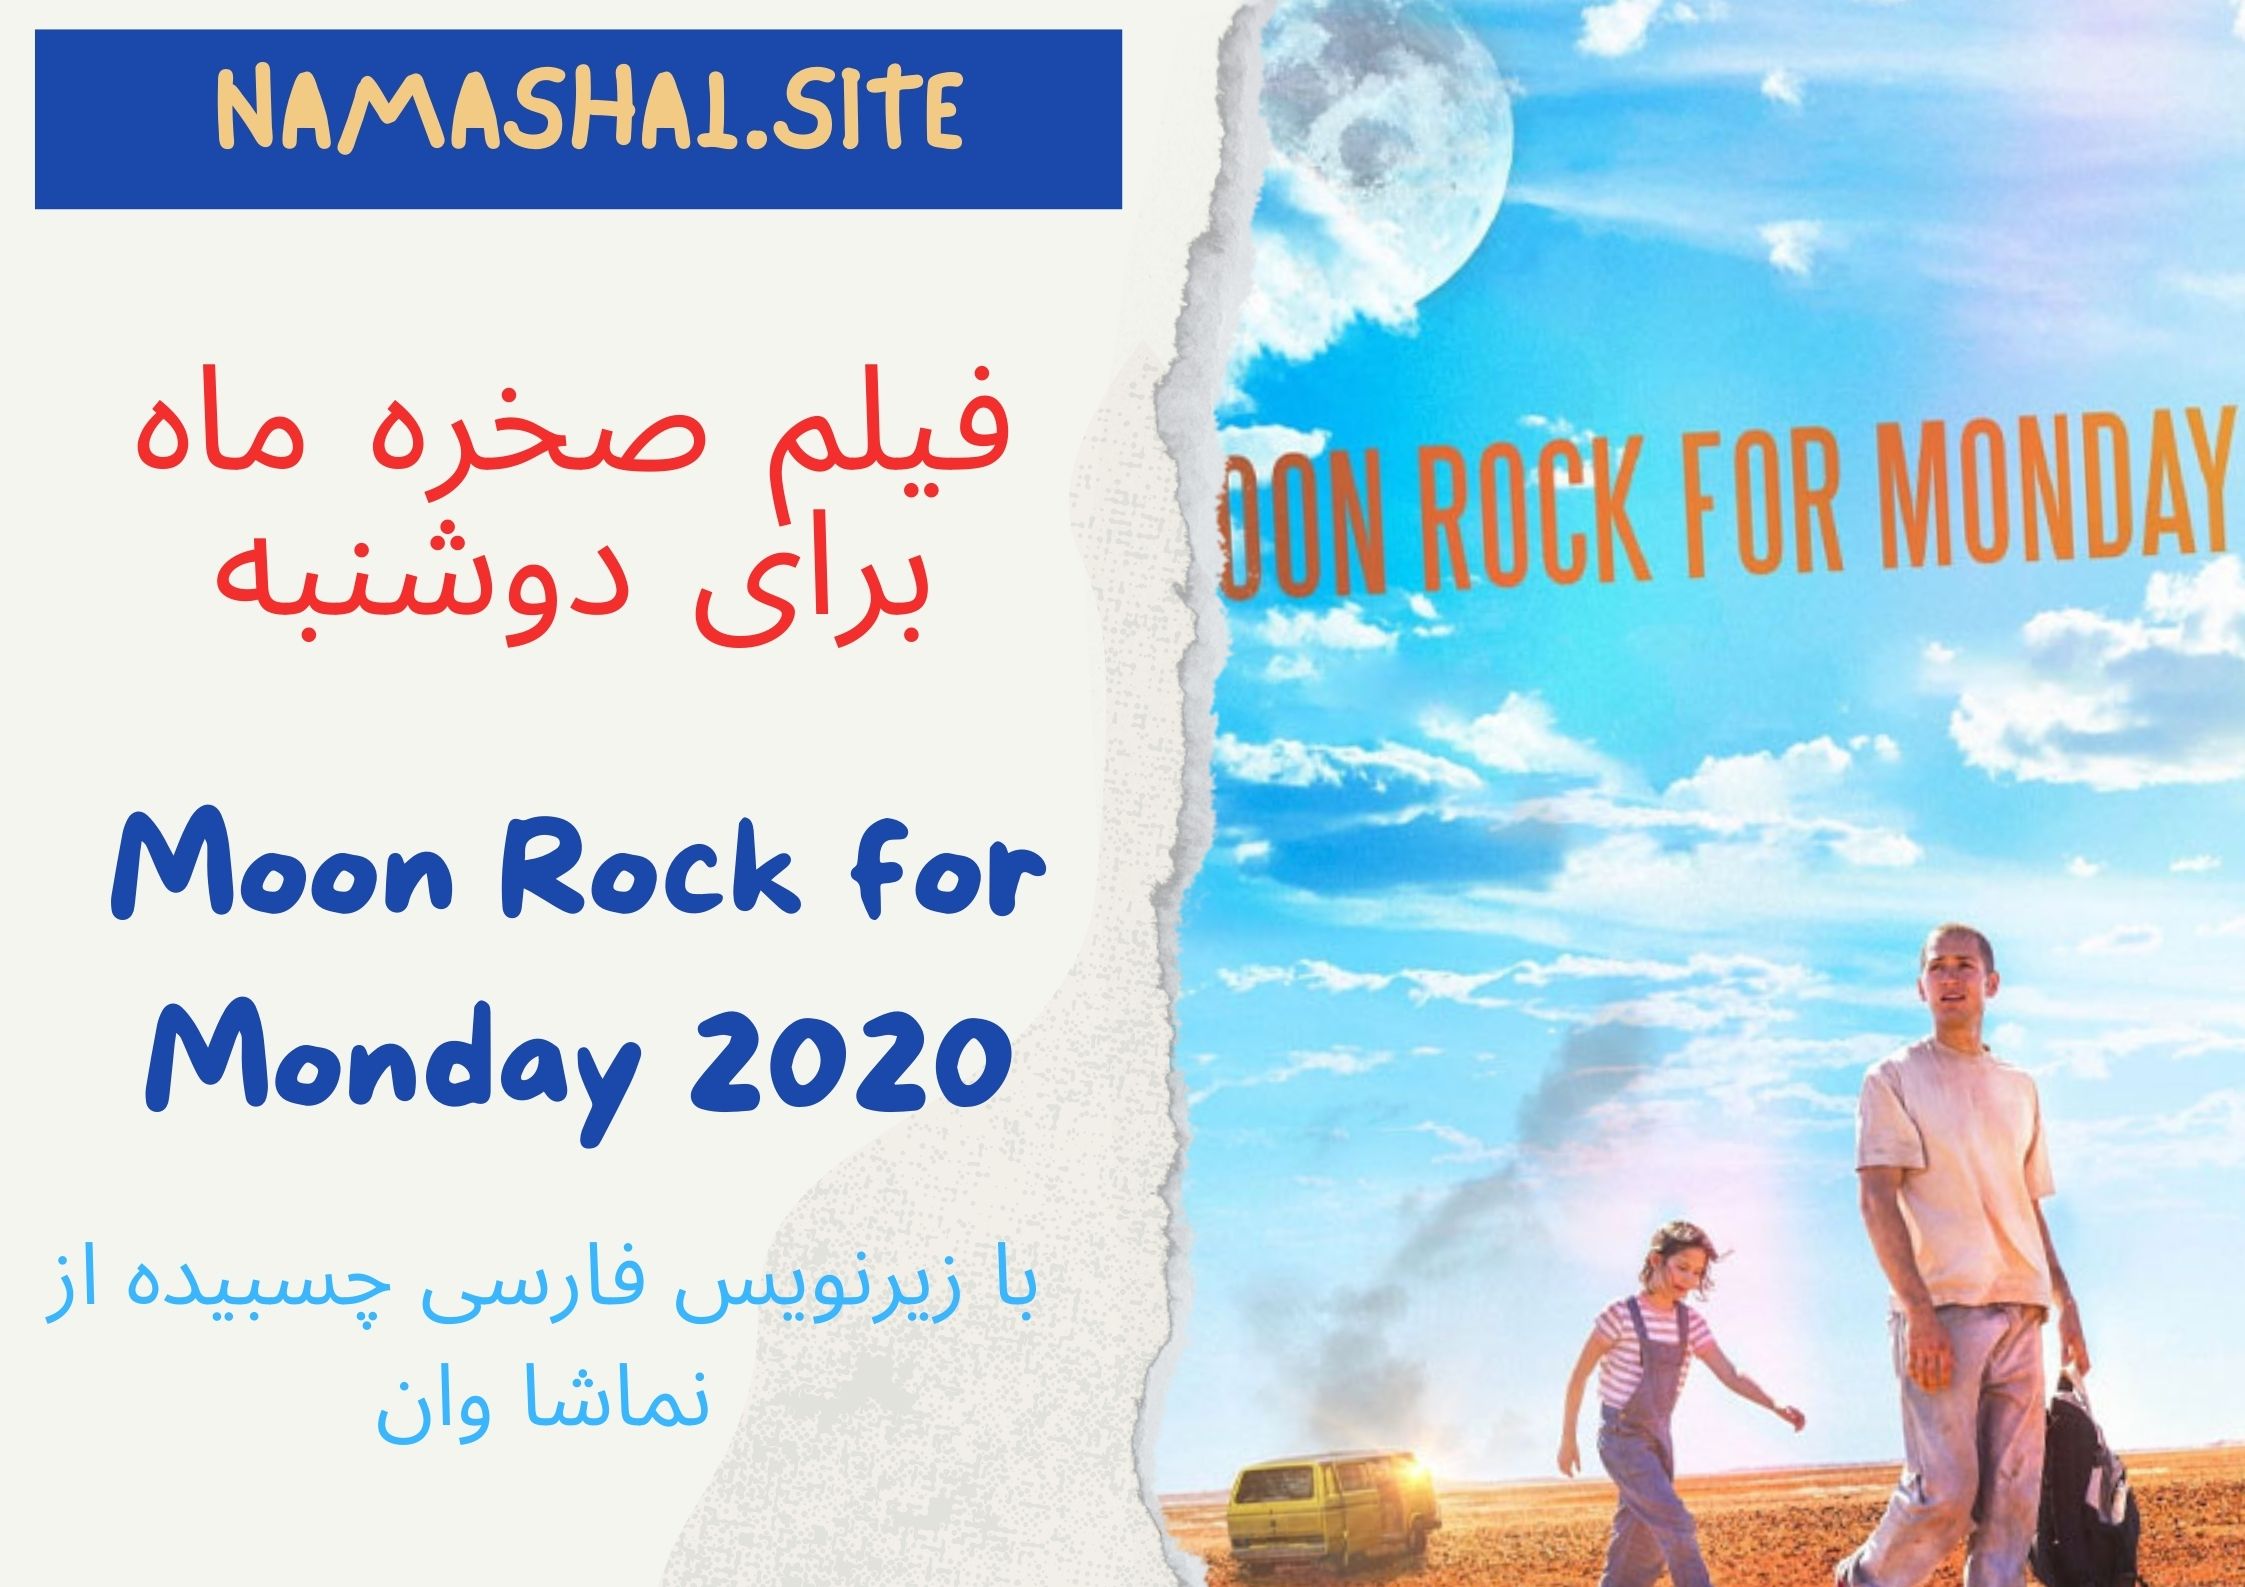  http://namasha1.rozblog.com/دانلود-فیلم-درام-صخره-ماه-برای-دوشنبه-Moon-Rock-for-Monday-.html